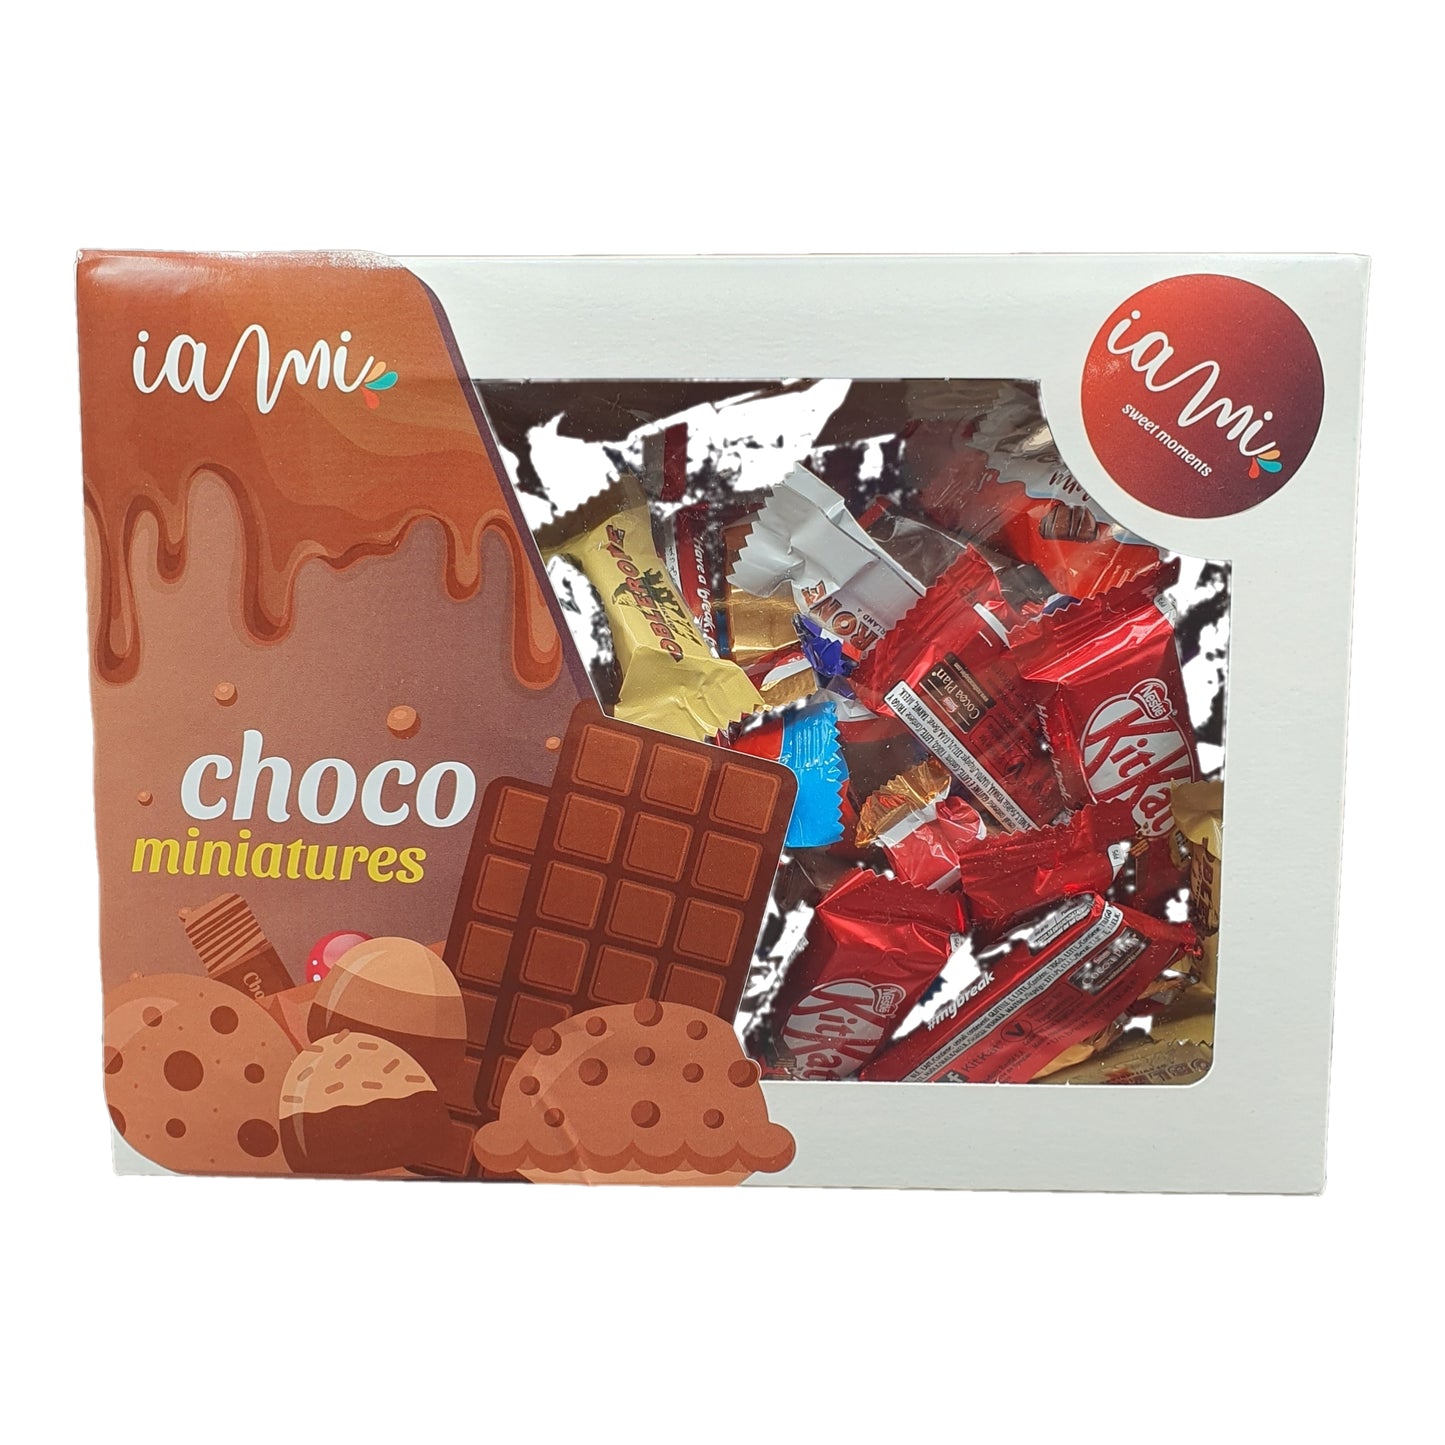 Surtido de Mini Chocolates de 100 Unidades | Caja Gourmet Chocolates MINI I Versiones Miniatures de Kit Kat, Toblerone, Kinder Bueno, Twix, Snickers, Kinder Chocolate, Shochobons, Mars [IAMI]